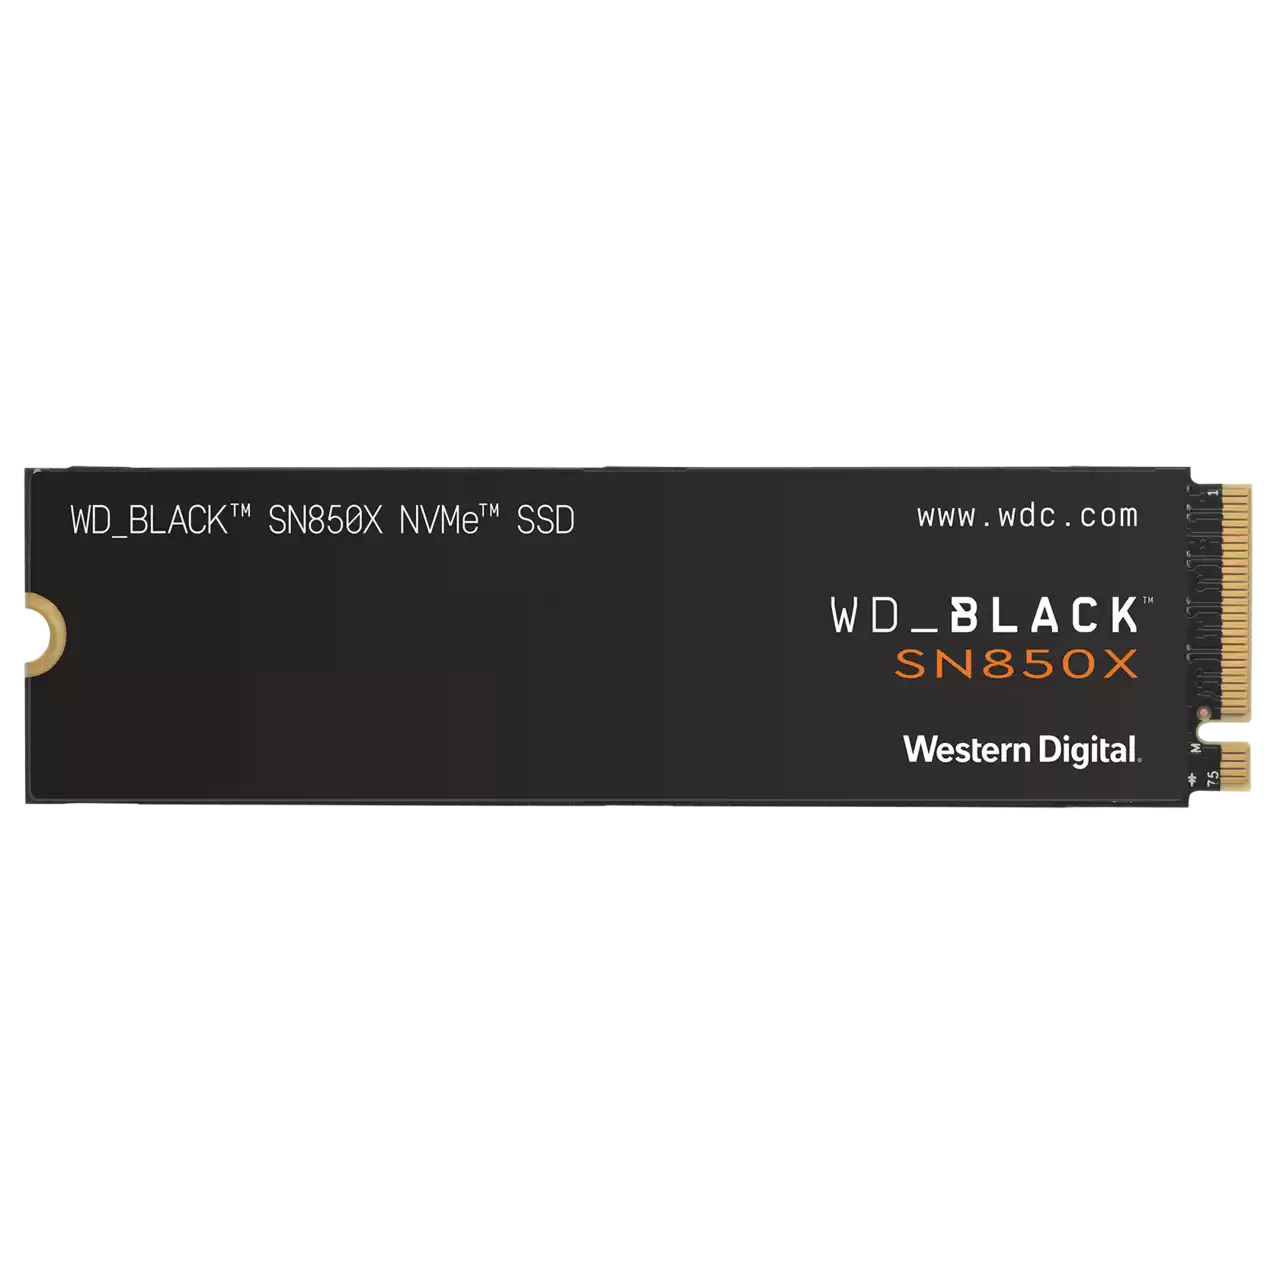 2TB WD_BLACK SN850X NVMe M.2 2280 PCIe 4.0 x4 Internal SSD w/ Heatsink $180 & w/o Heatsink $170 + Free Shipping